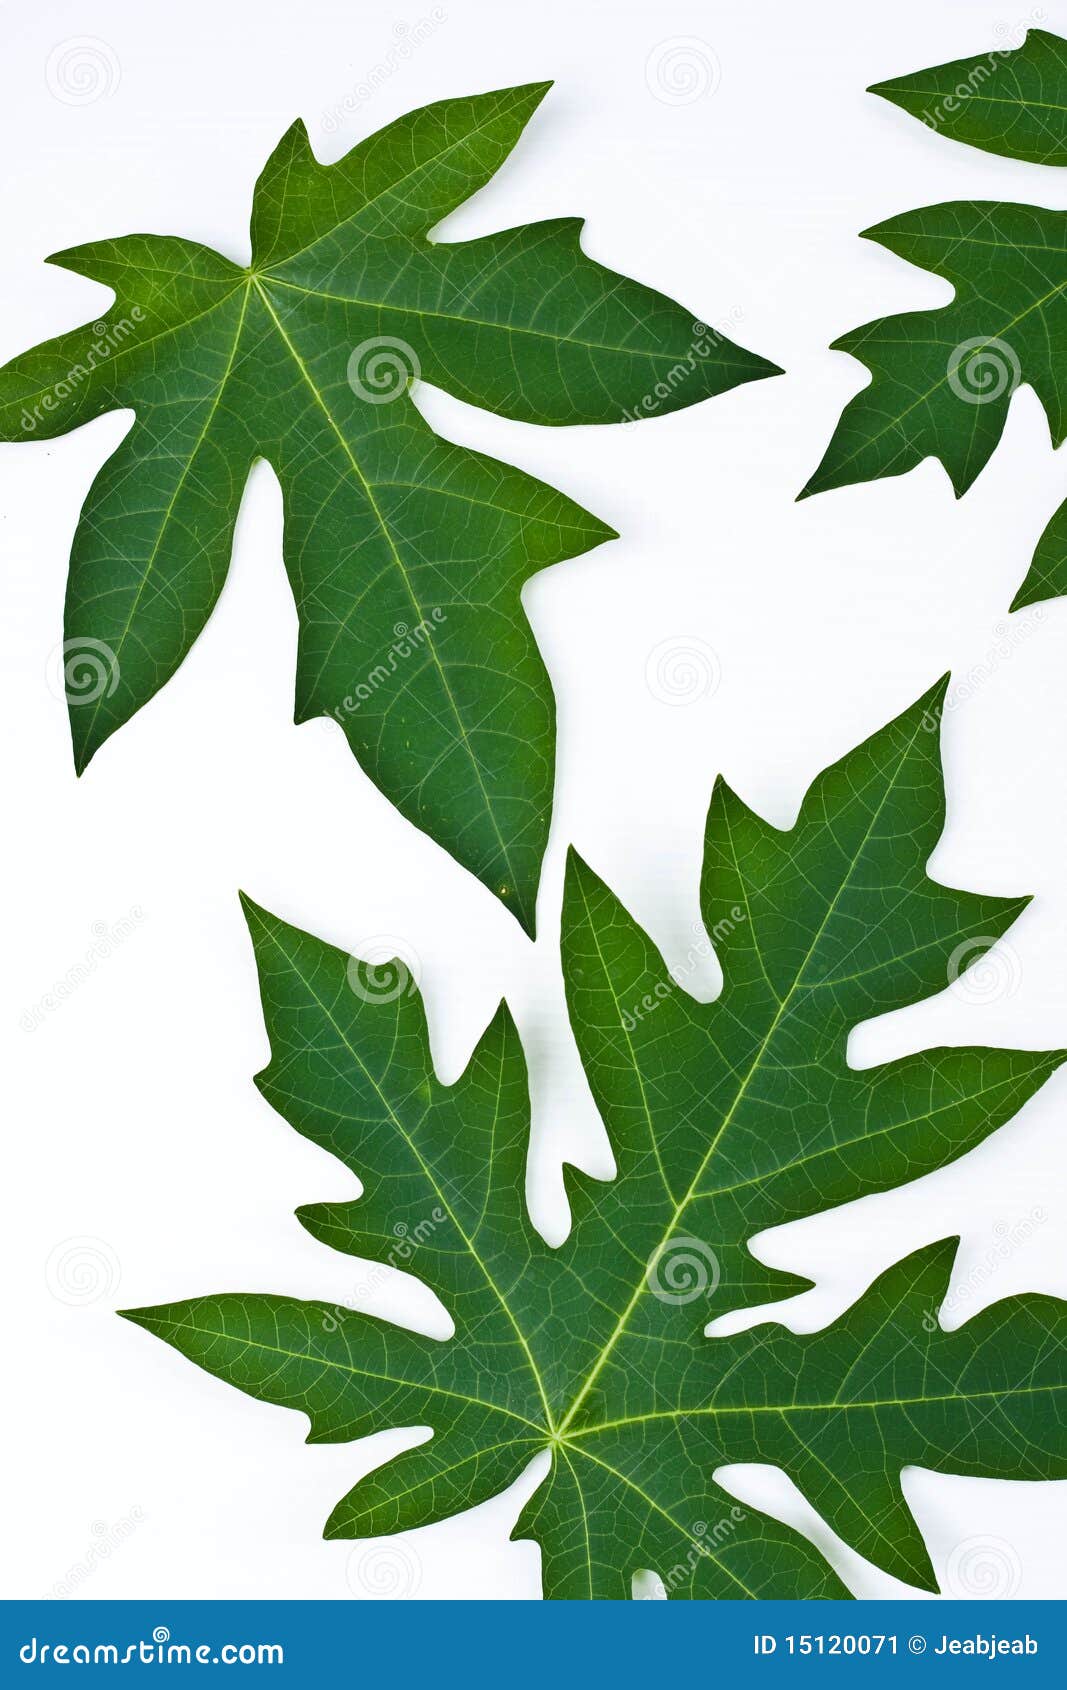 Leaf on white background stock image. Image of natural - 15120071